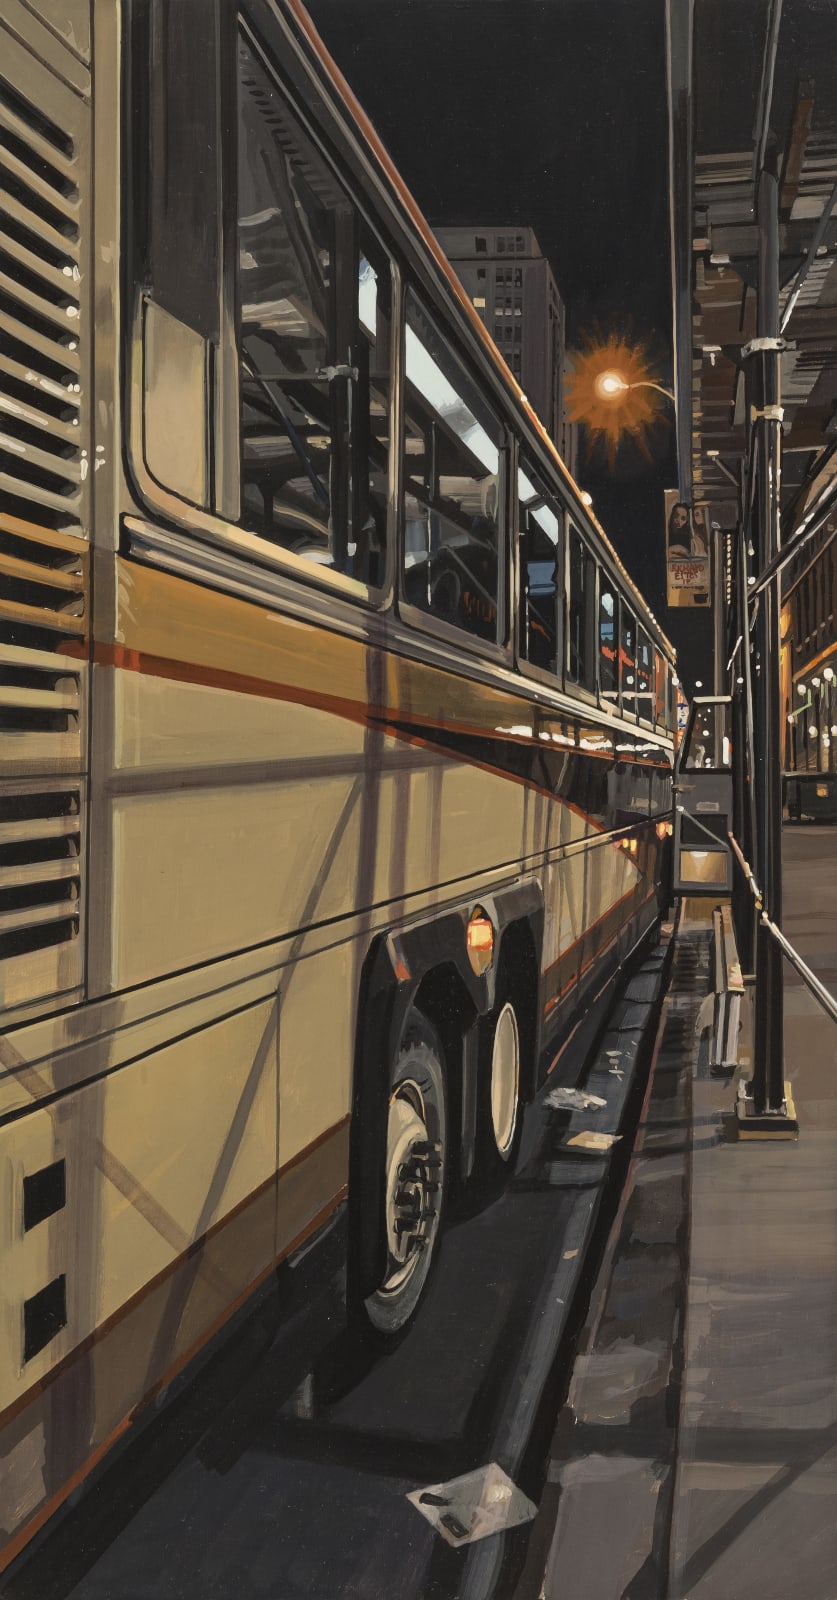 Richard Estes, Tour Bus, 2012